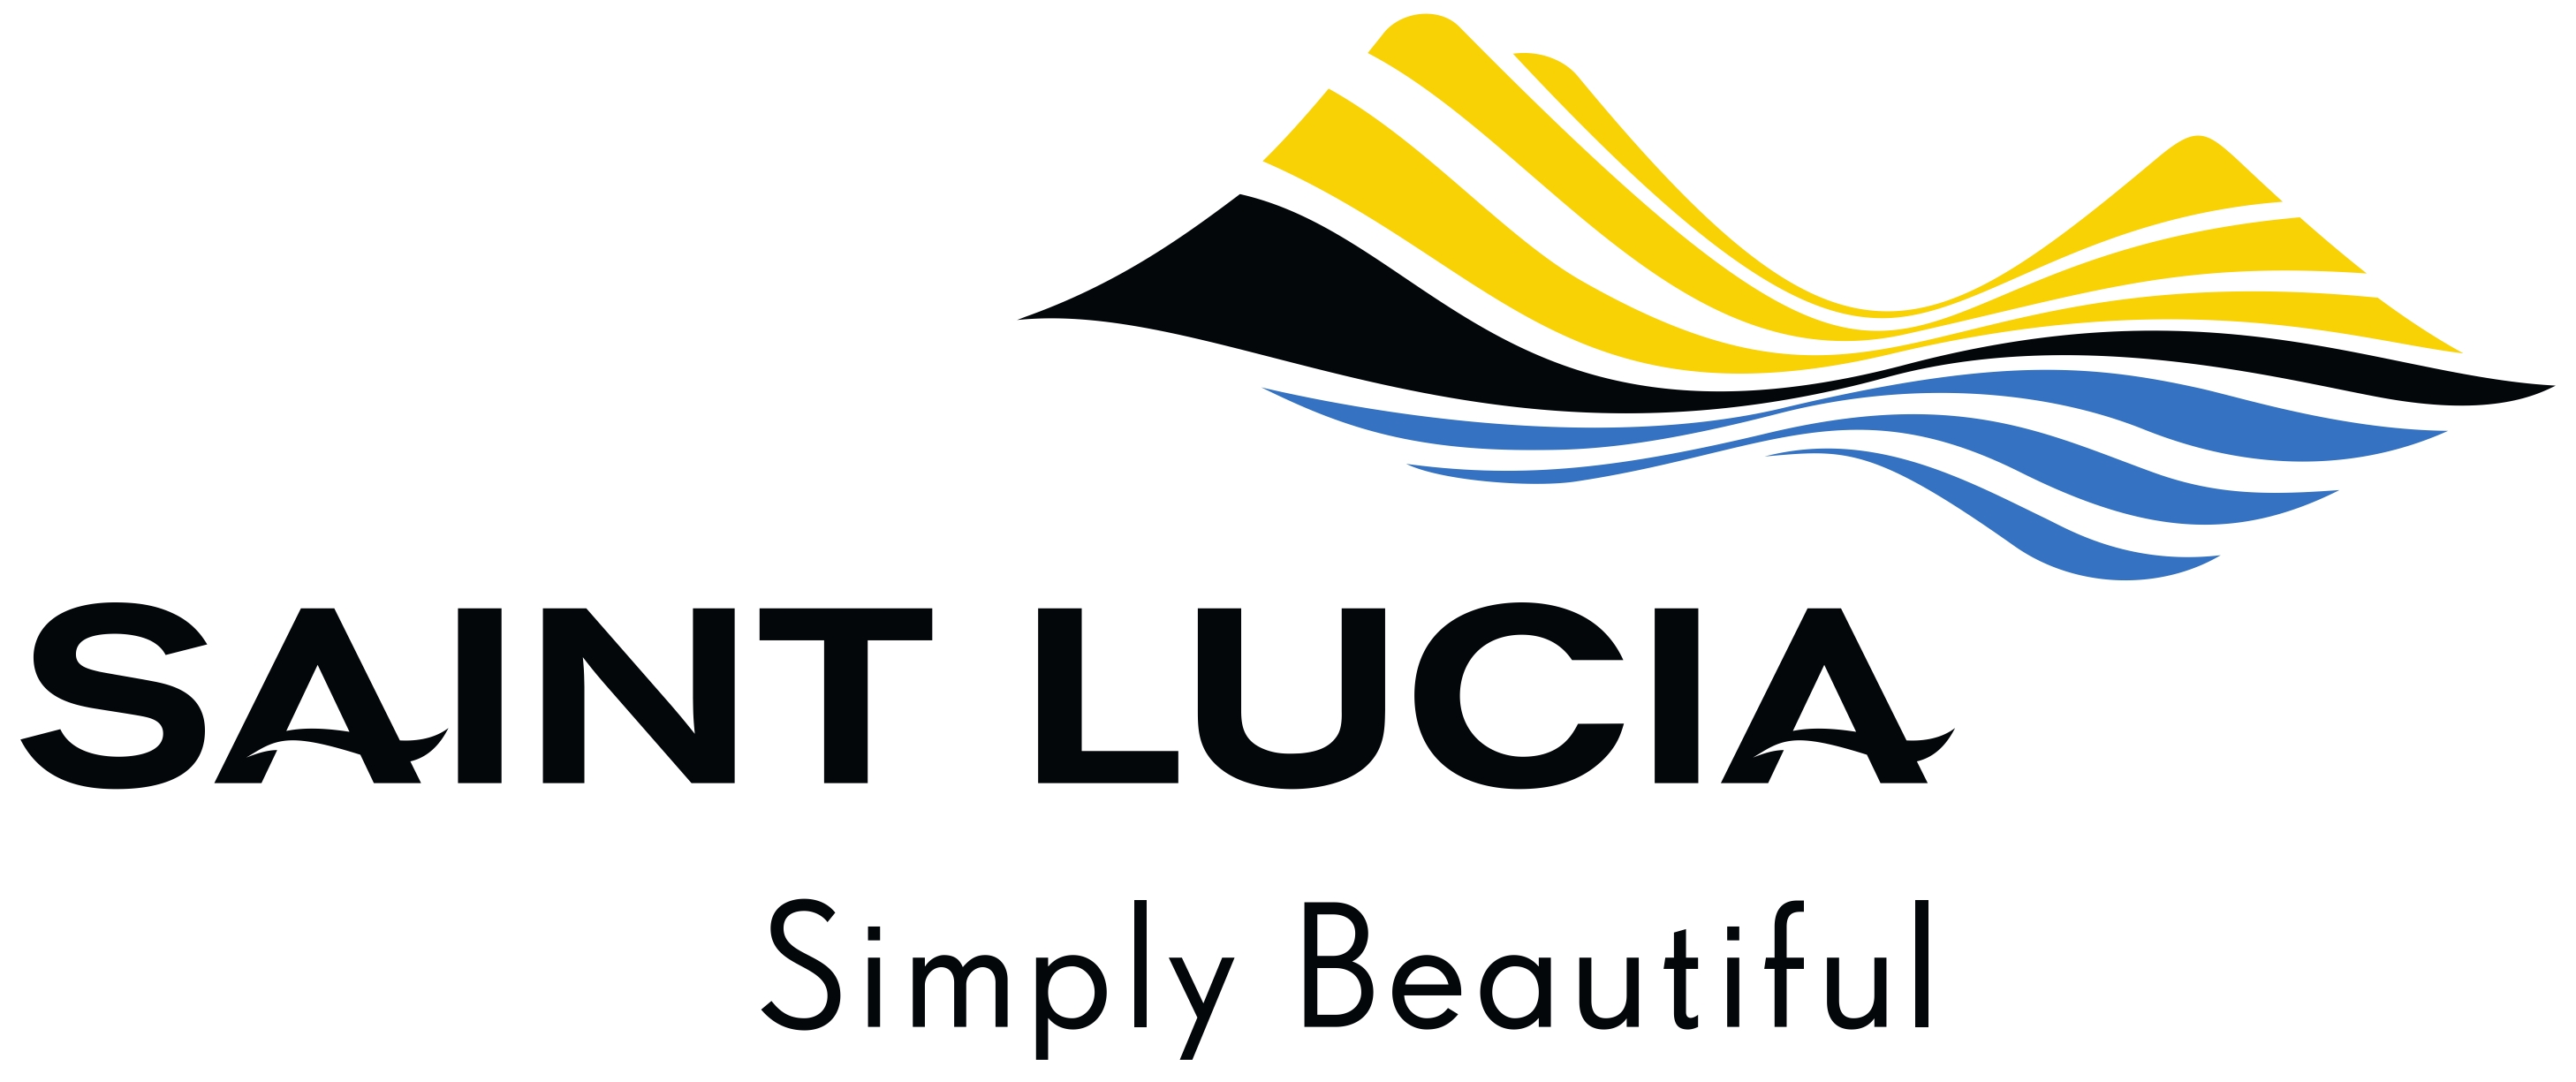 st lucia tourism authority